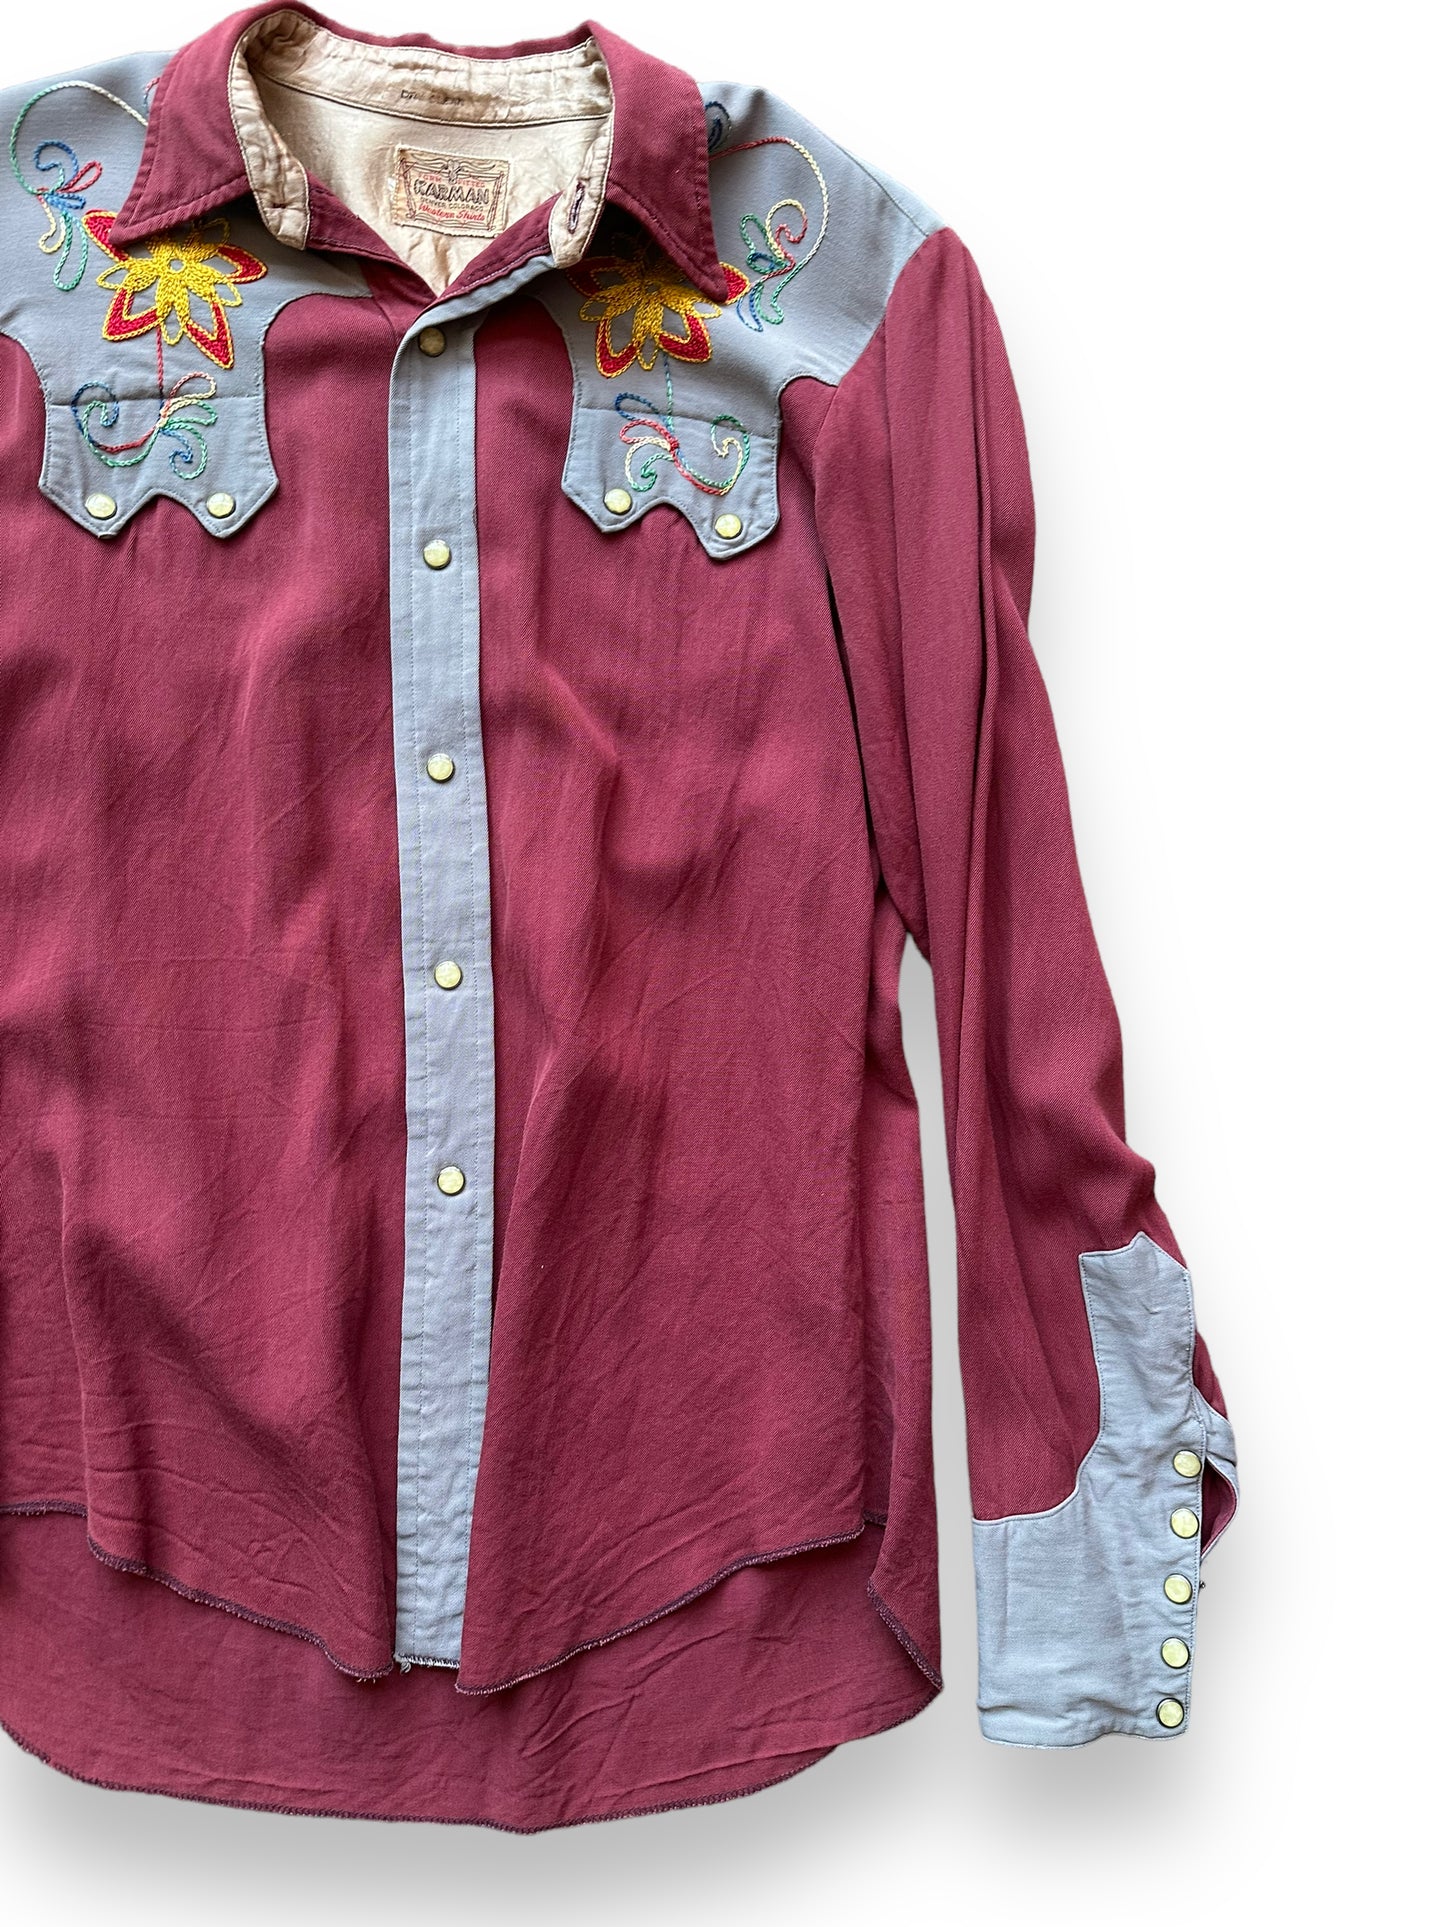 Vintage Karman Chainstitched Gabardine Western Shirt SZ M | Vintage Ch –  The Barn Owl